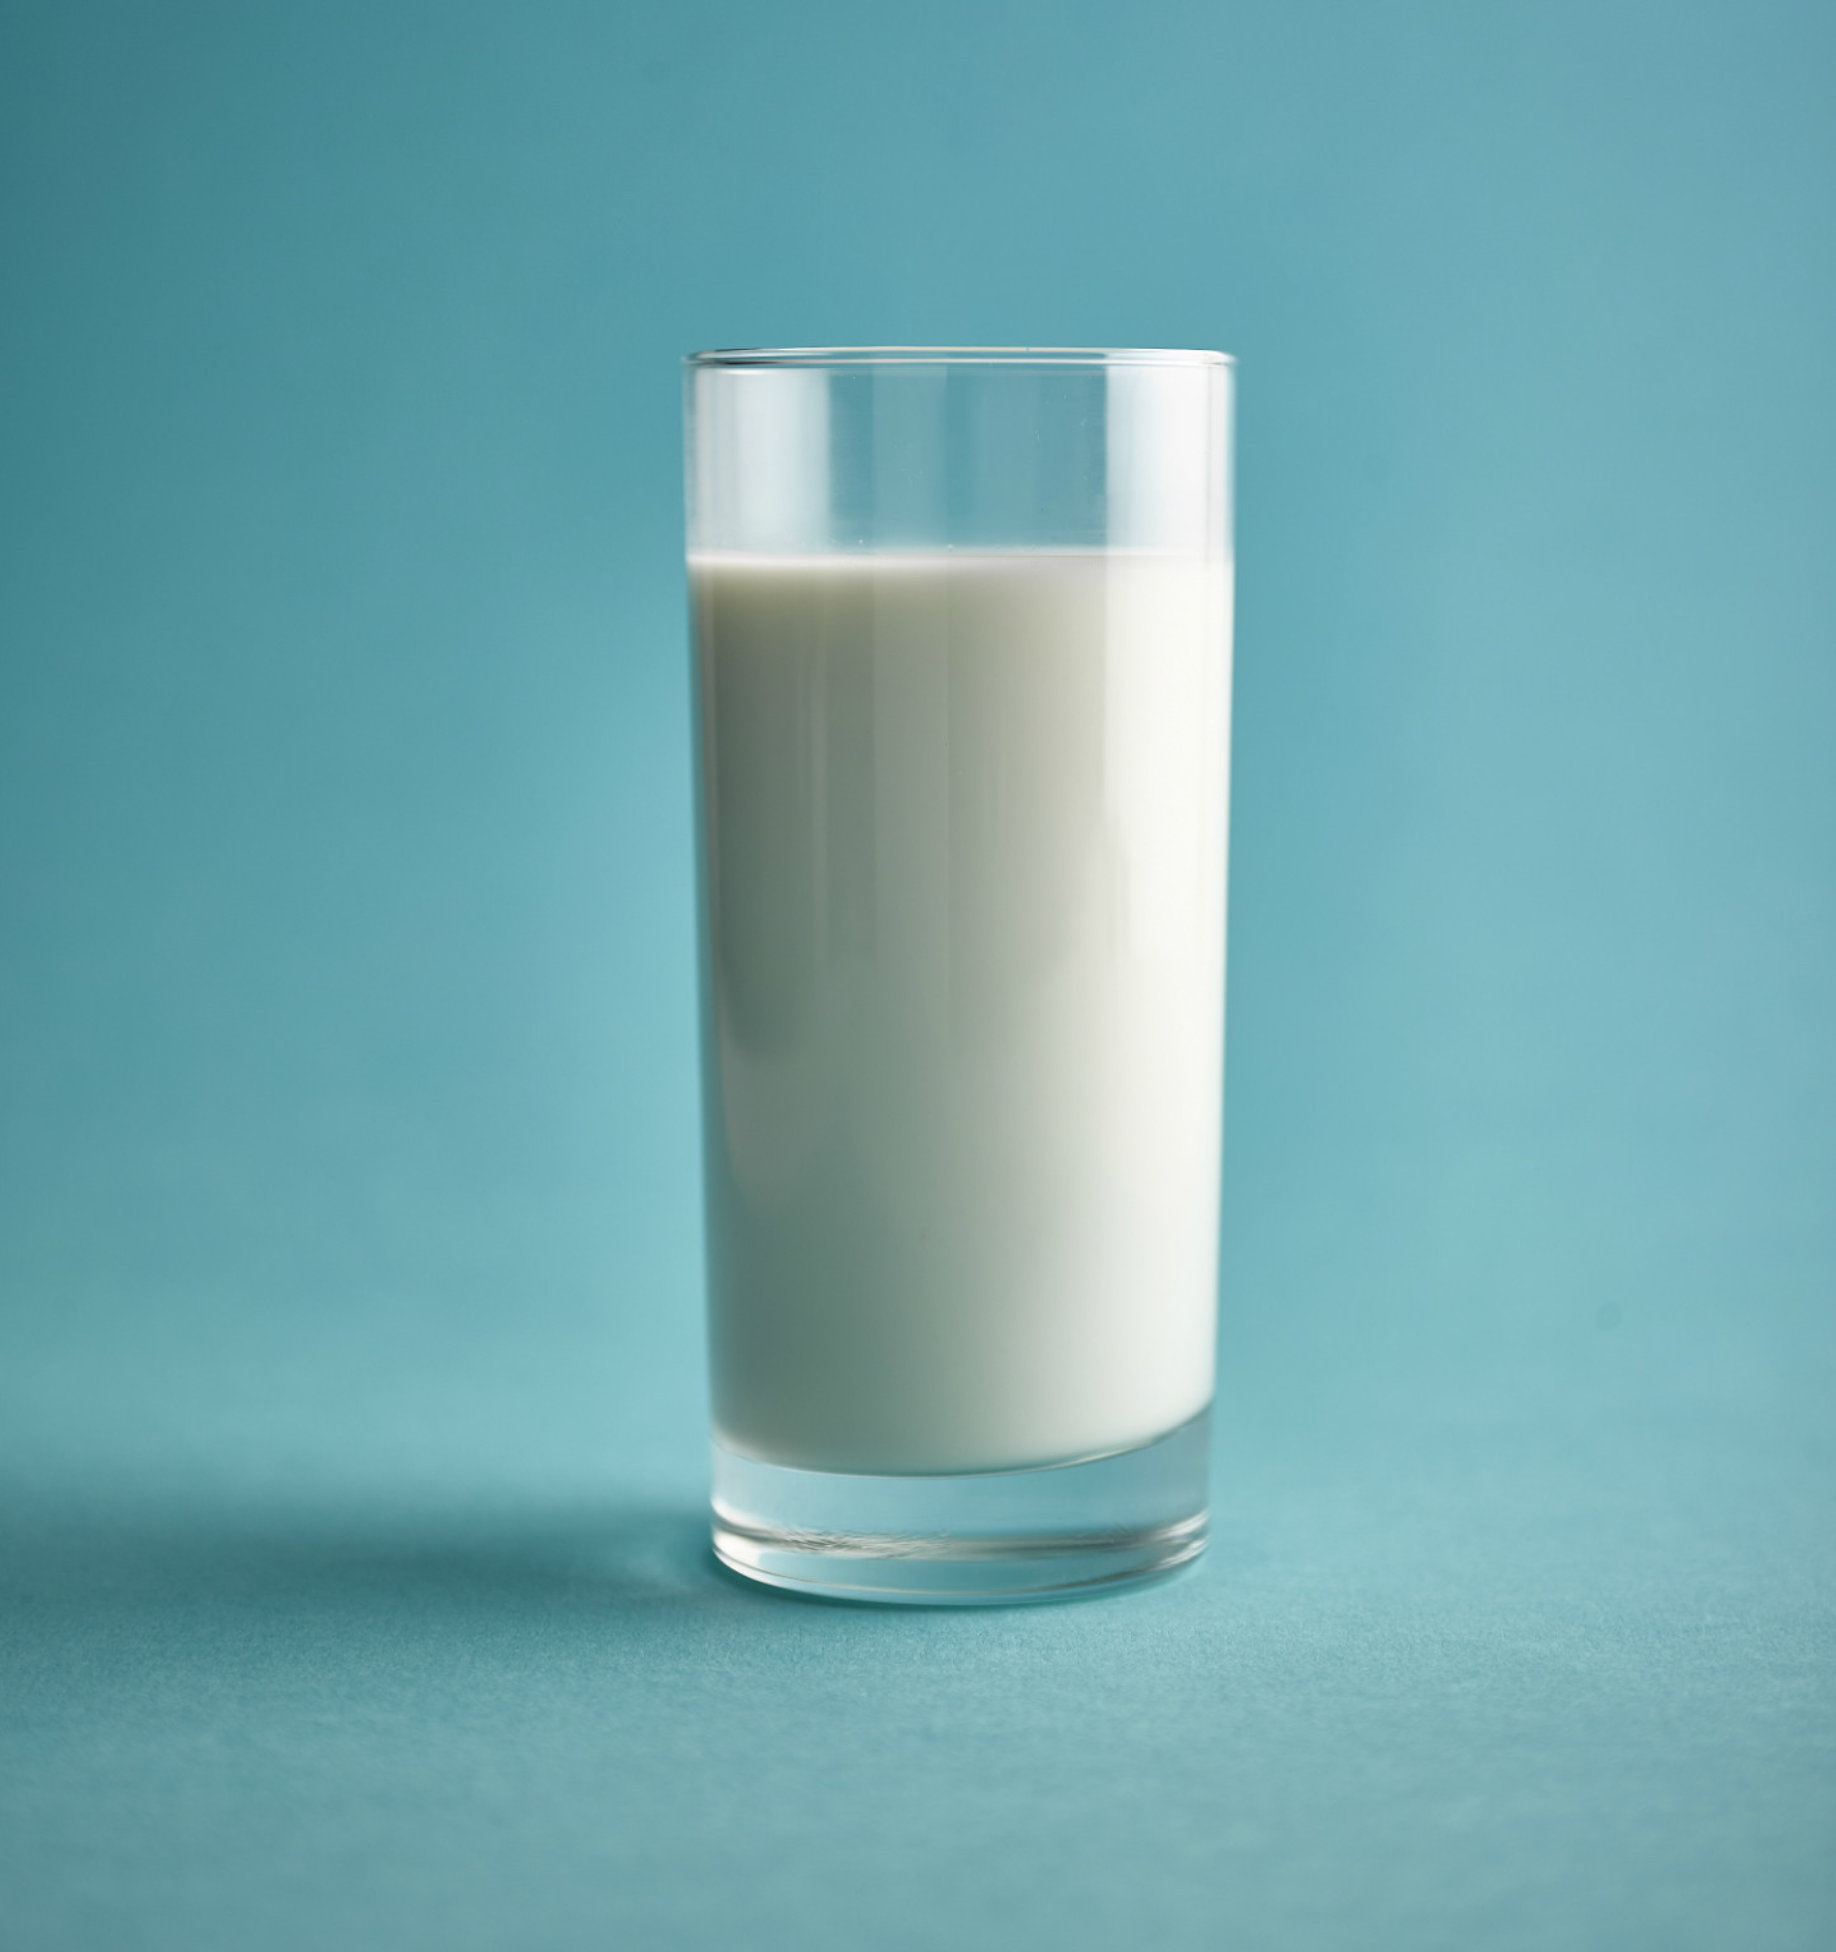 Glass of milk credit push doctor